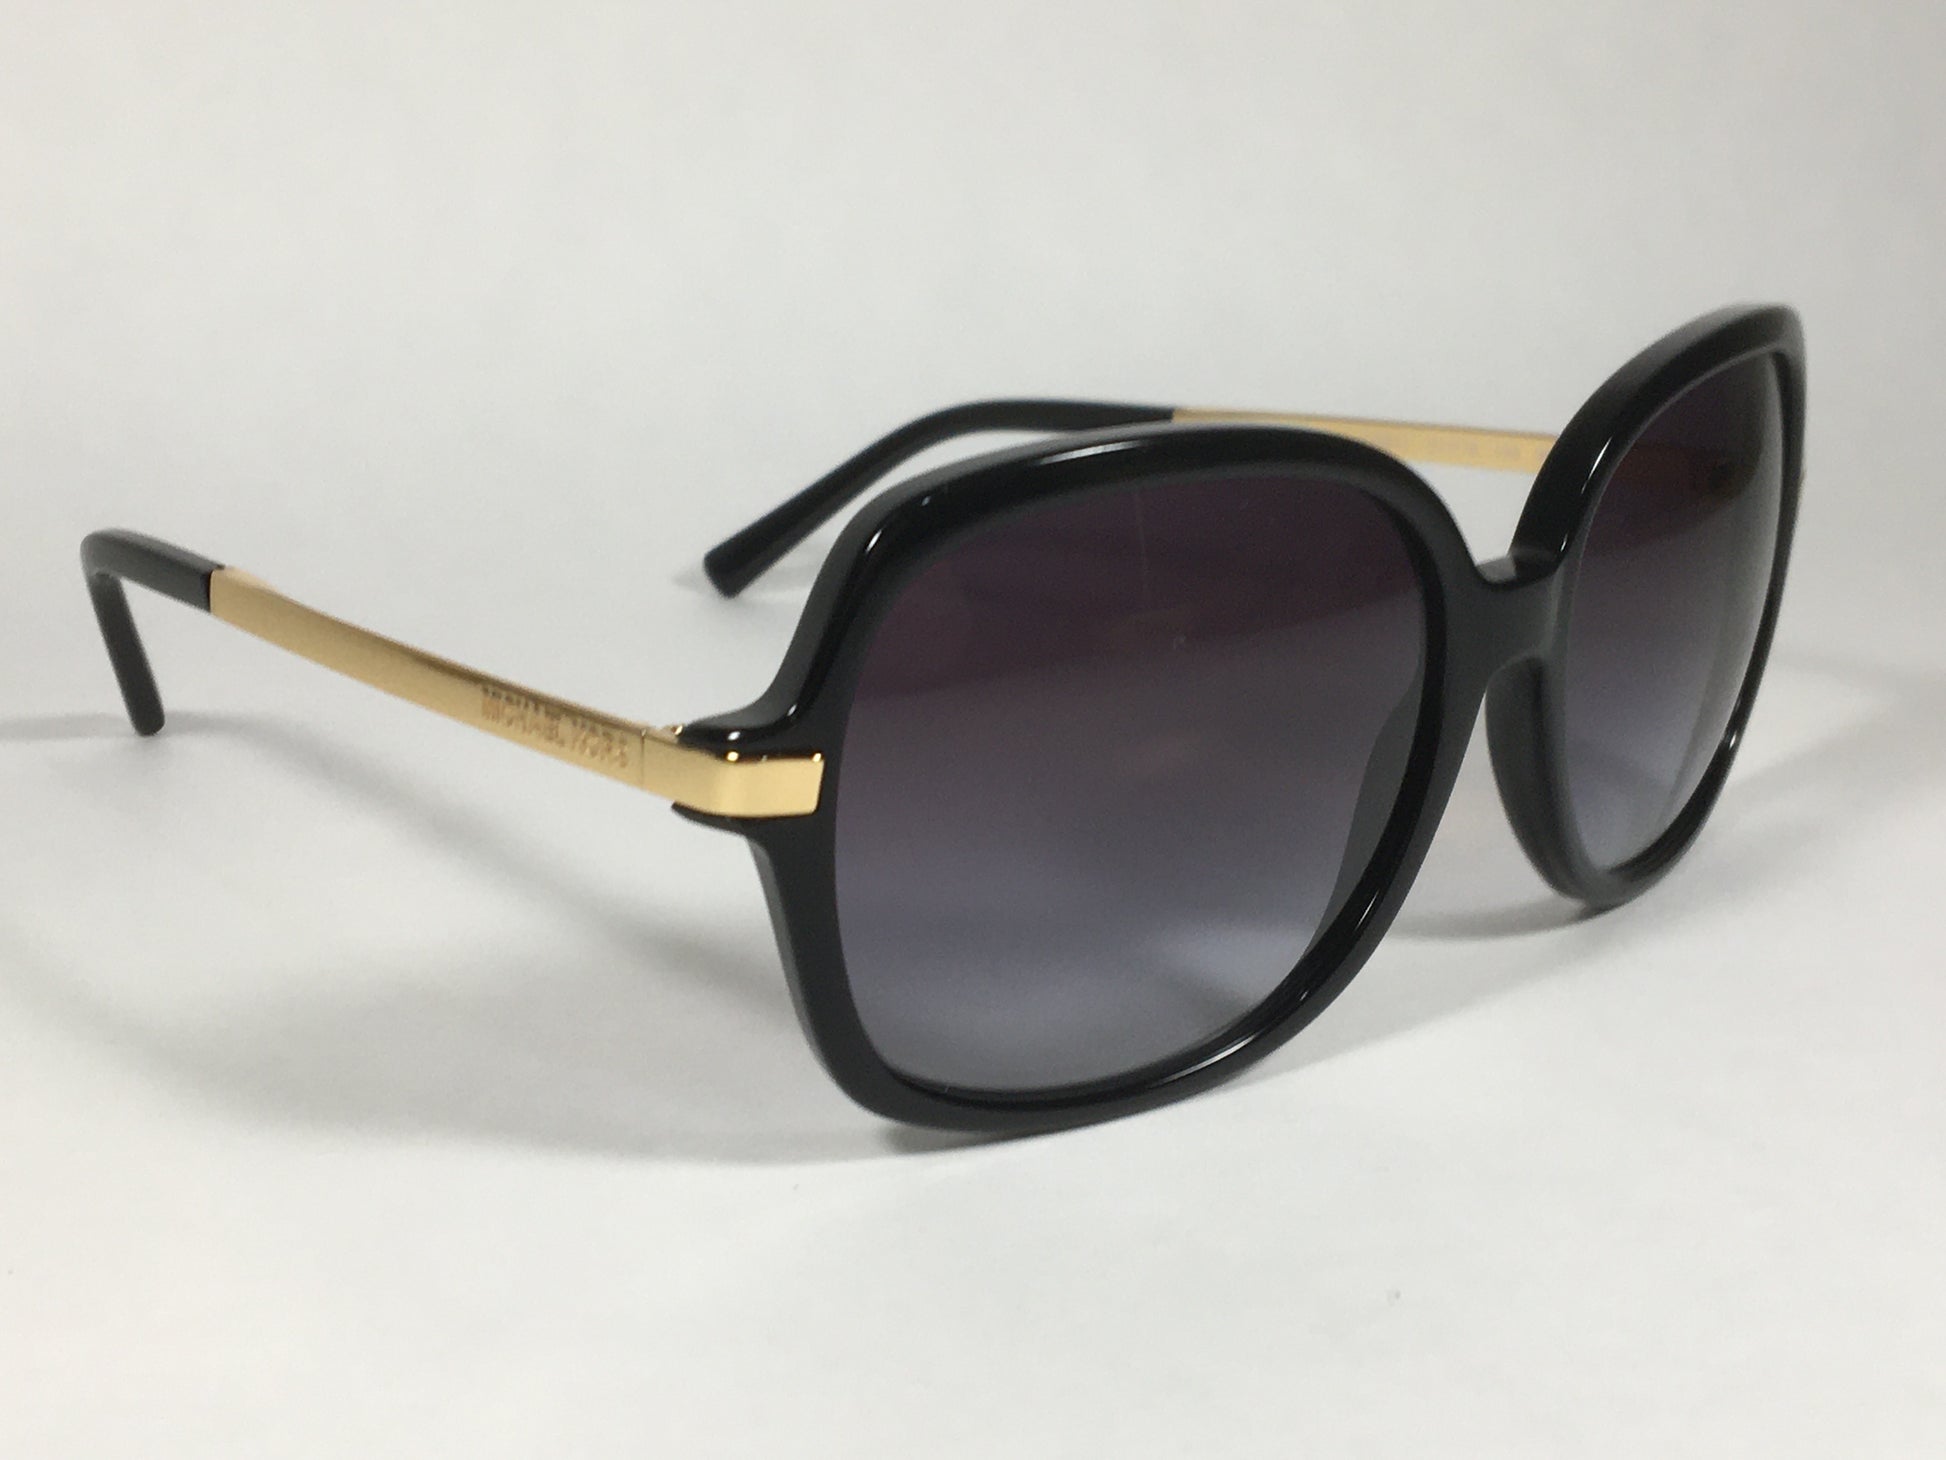 Michael Kors Adrianna II Square Sunglasses Shiny Black Gold Gray Gradient Lens MK-2024 - Sunglasses